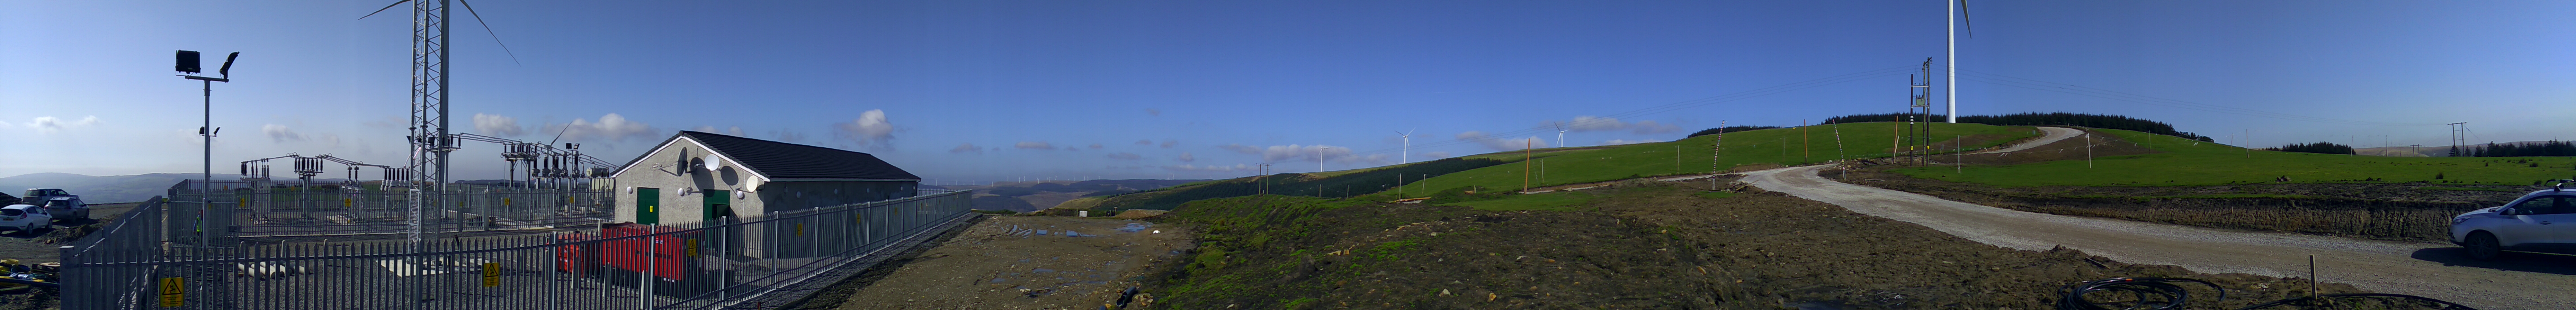 Sistema de P&C ZIV para Llynfl Afan Renewable Energy Park (Wertern Power Distribution UK)